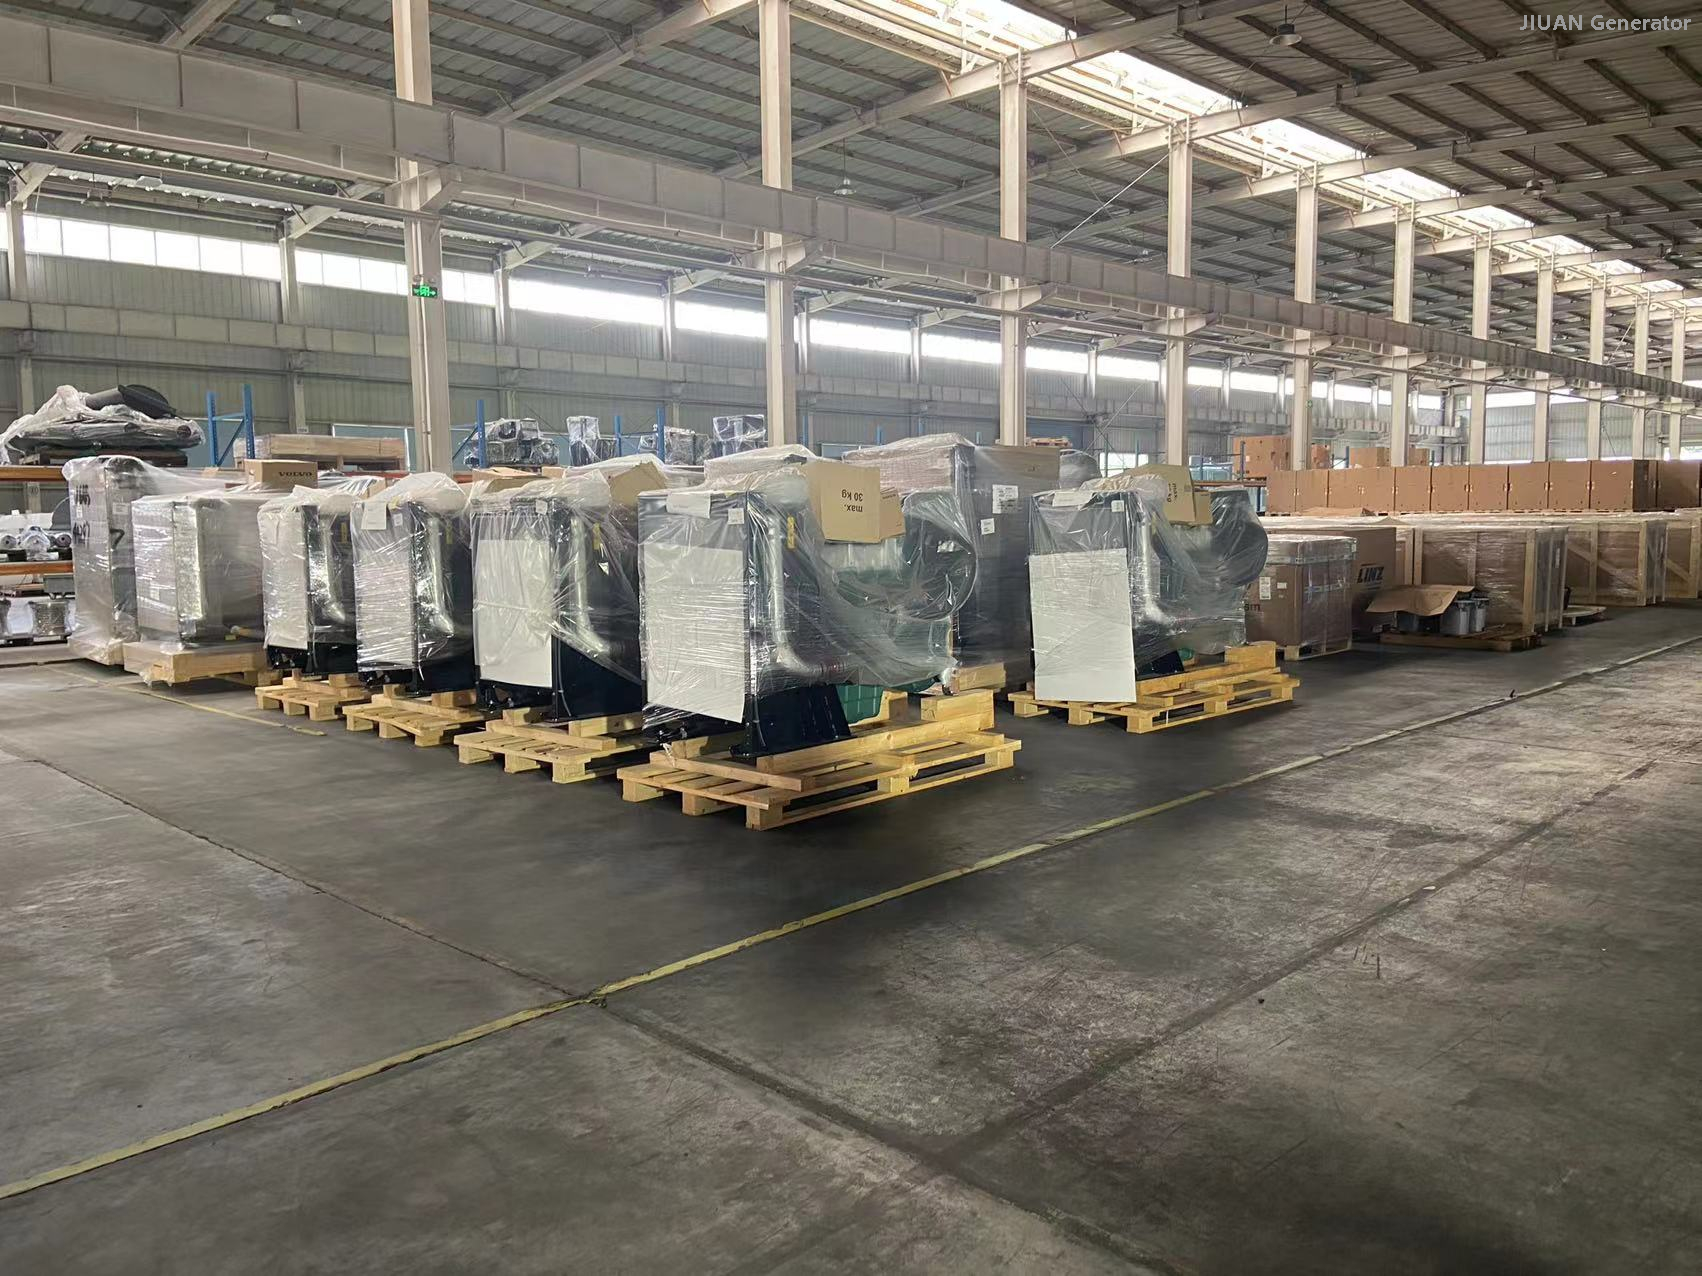 500kva diesel generator 400kw diesel generator set 500kva generator in guangzhou